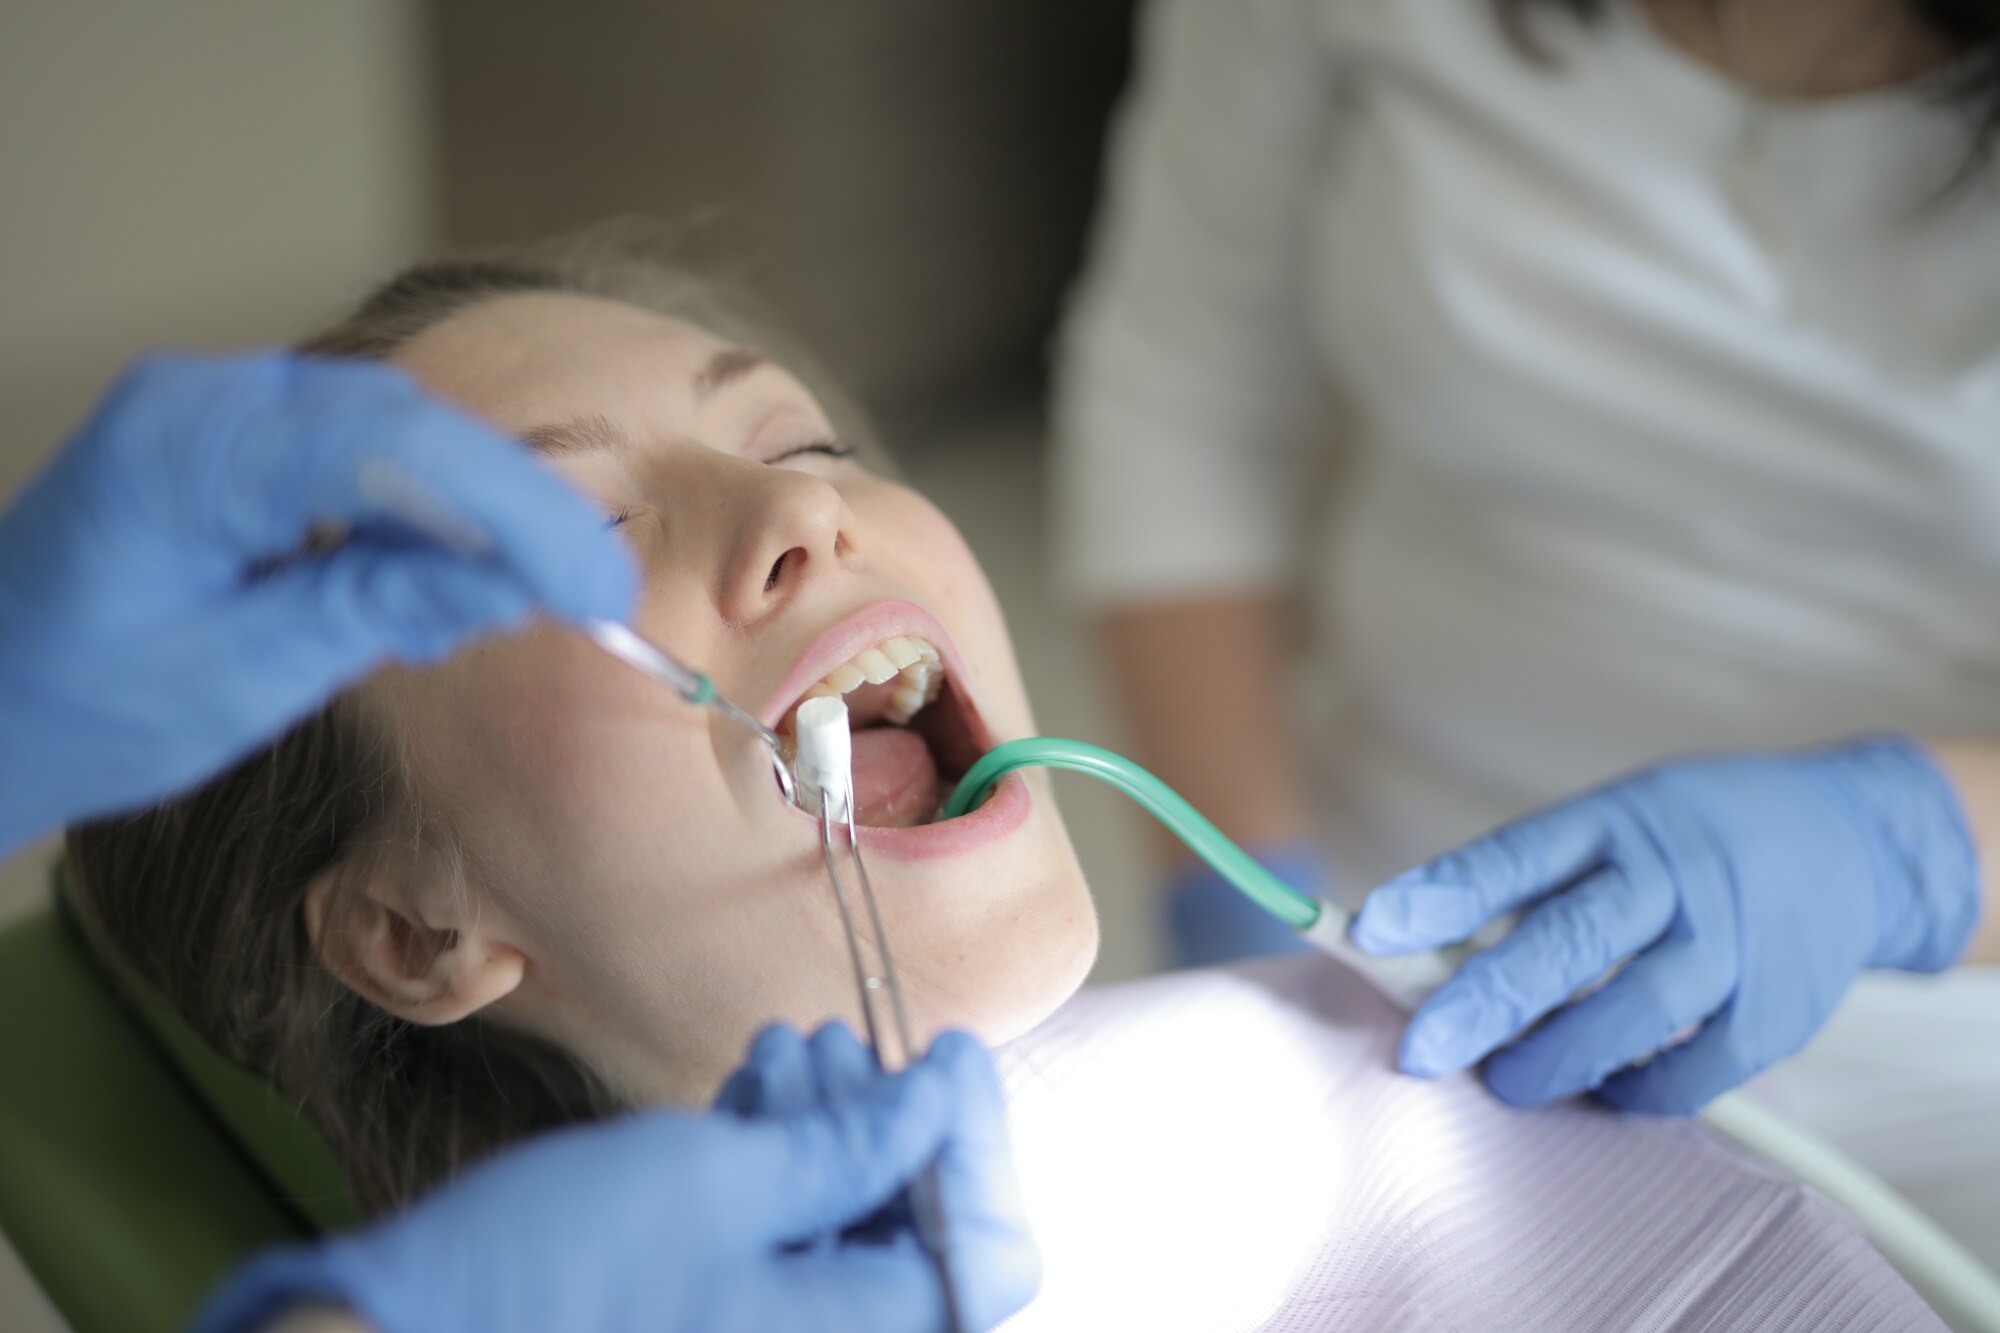 Dentist works on patient's teeth